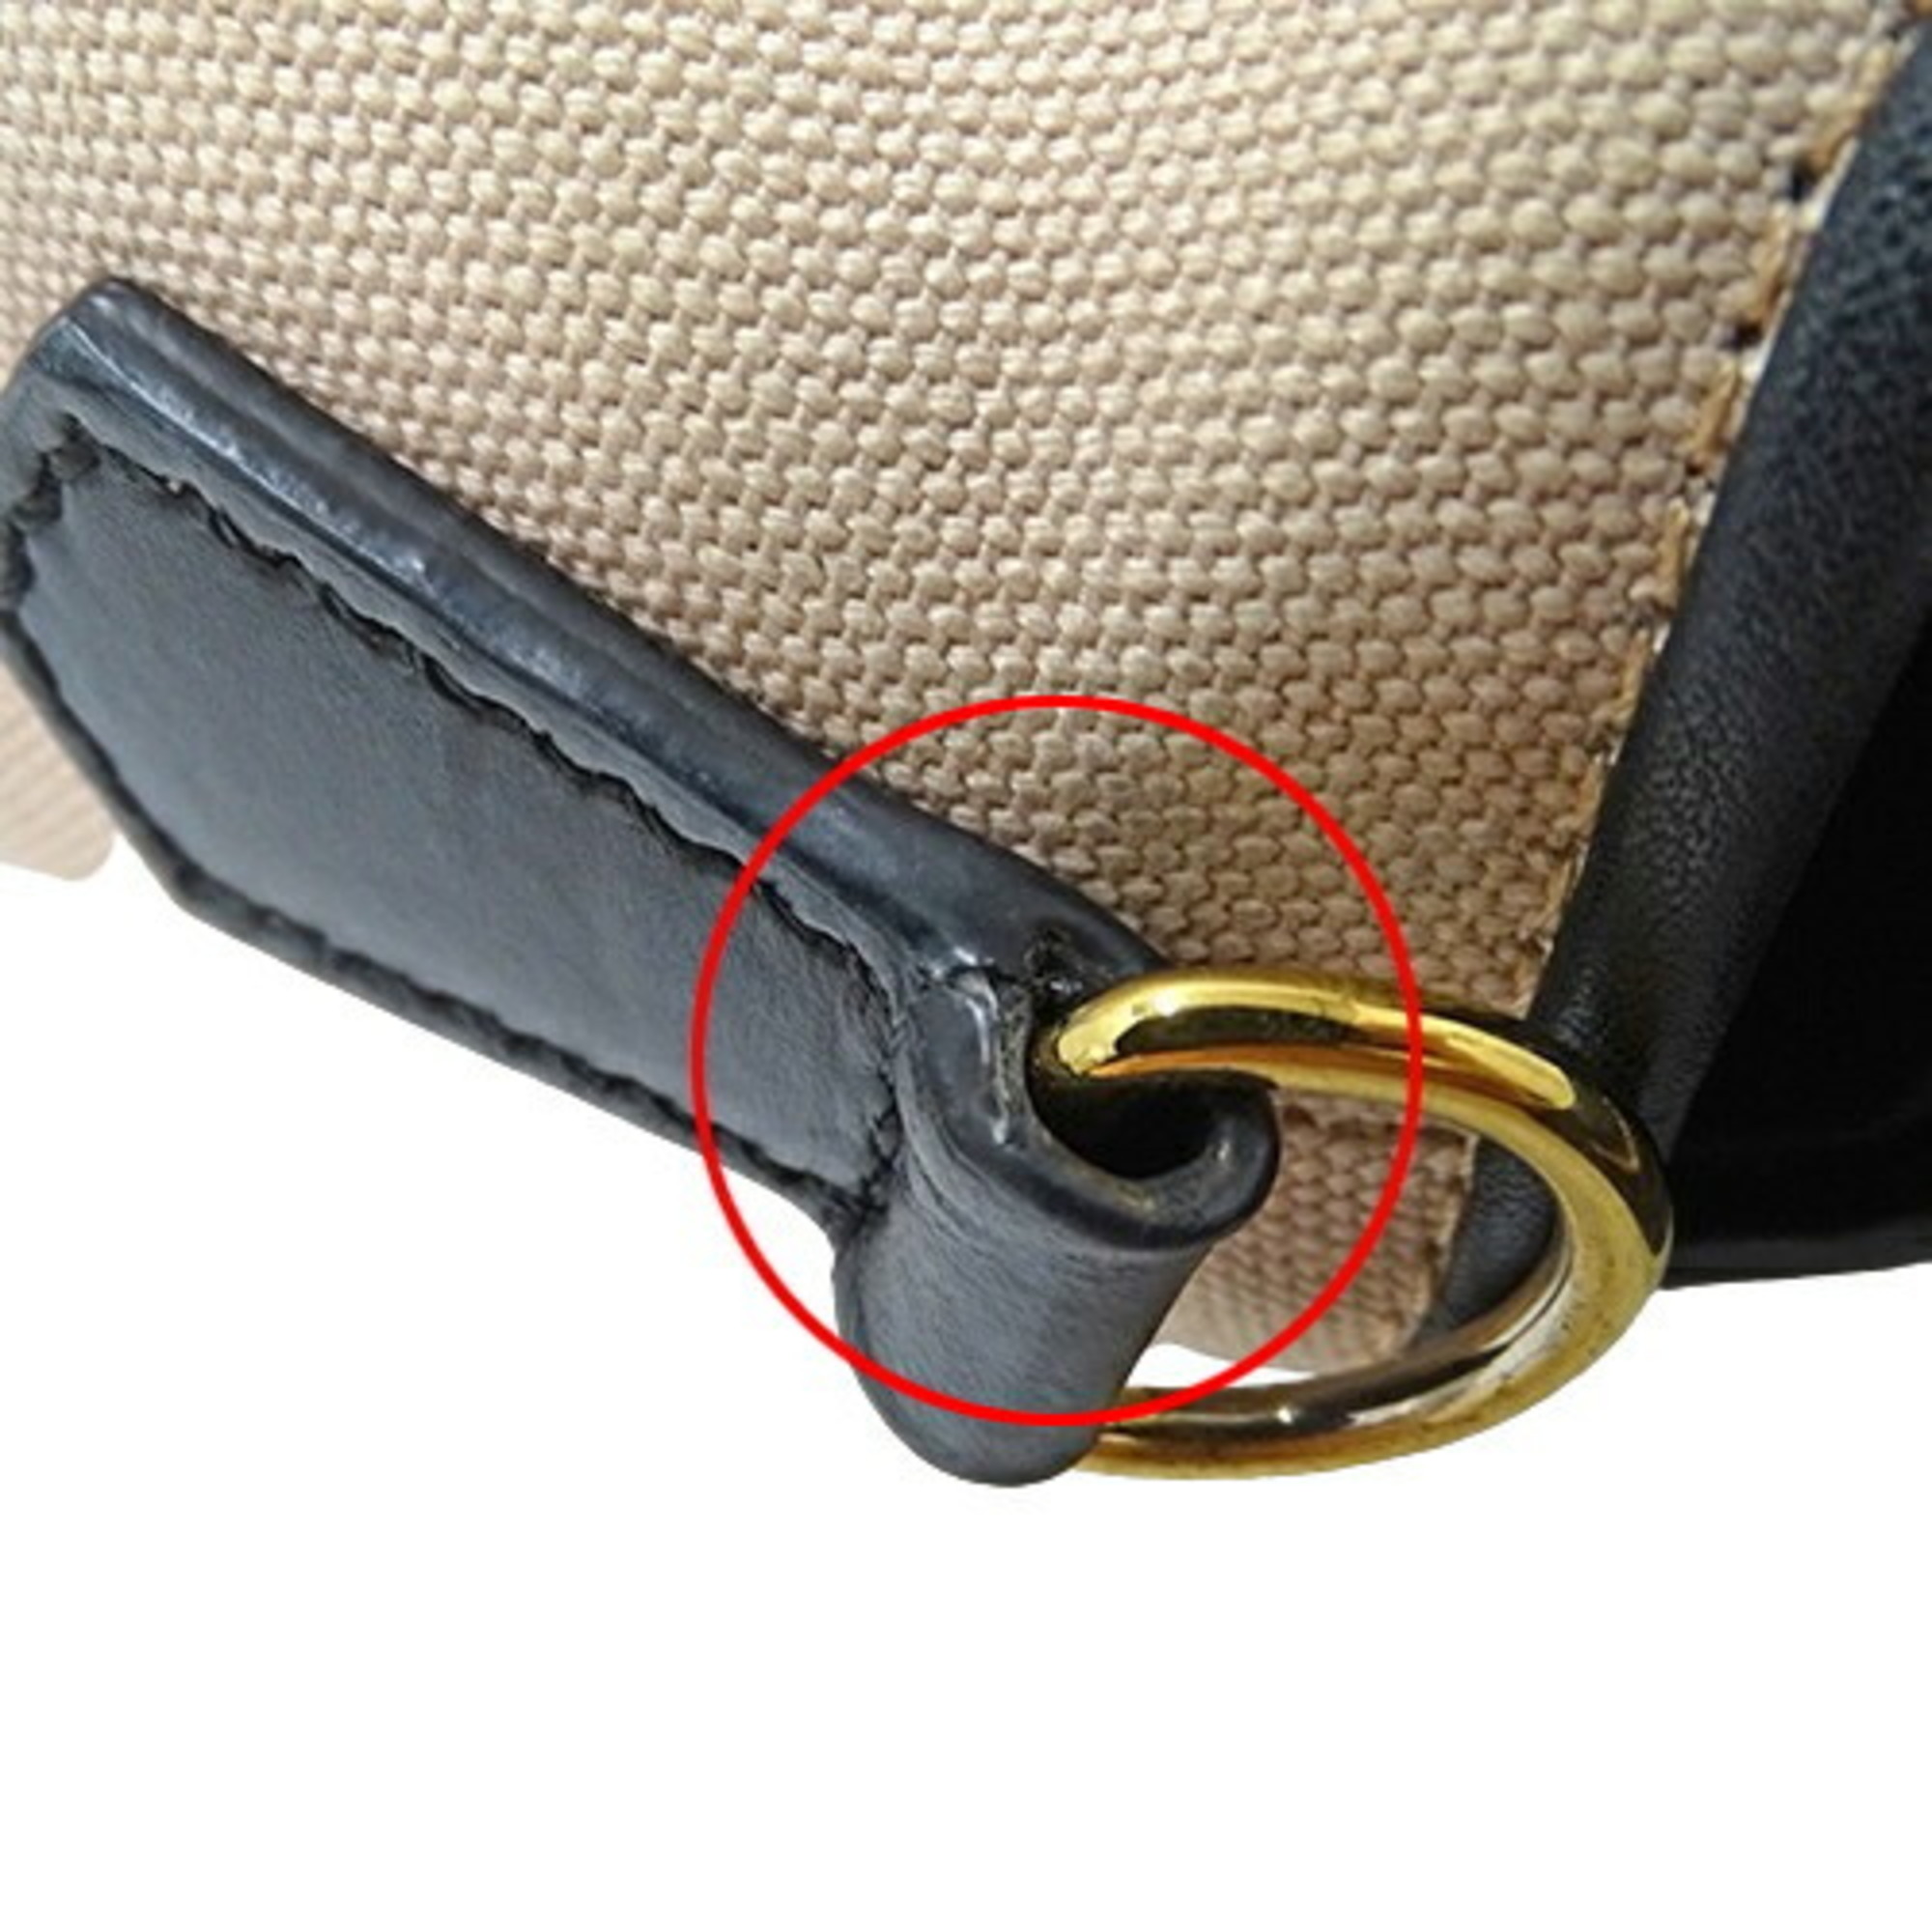 FENDI Bag Women's Handbag Shoulder 2way Visible Medium Canvas Leather Pink Beige Black 8BL146 Bicolor Crossbody